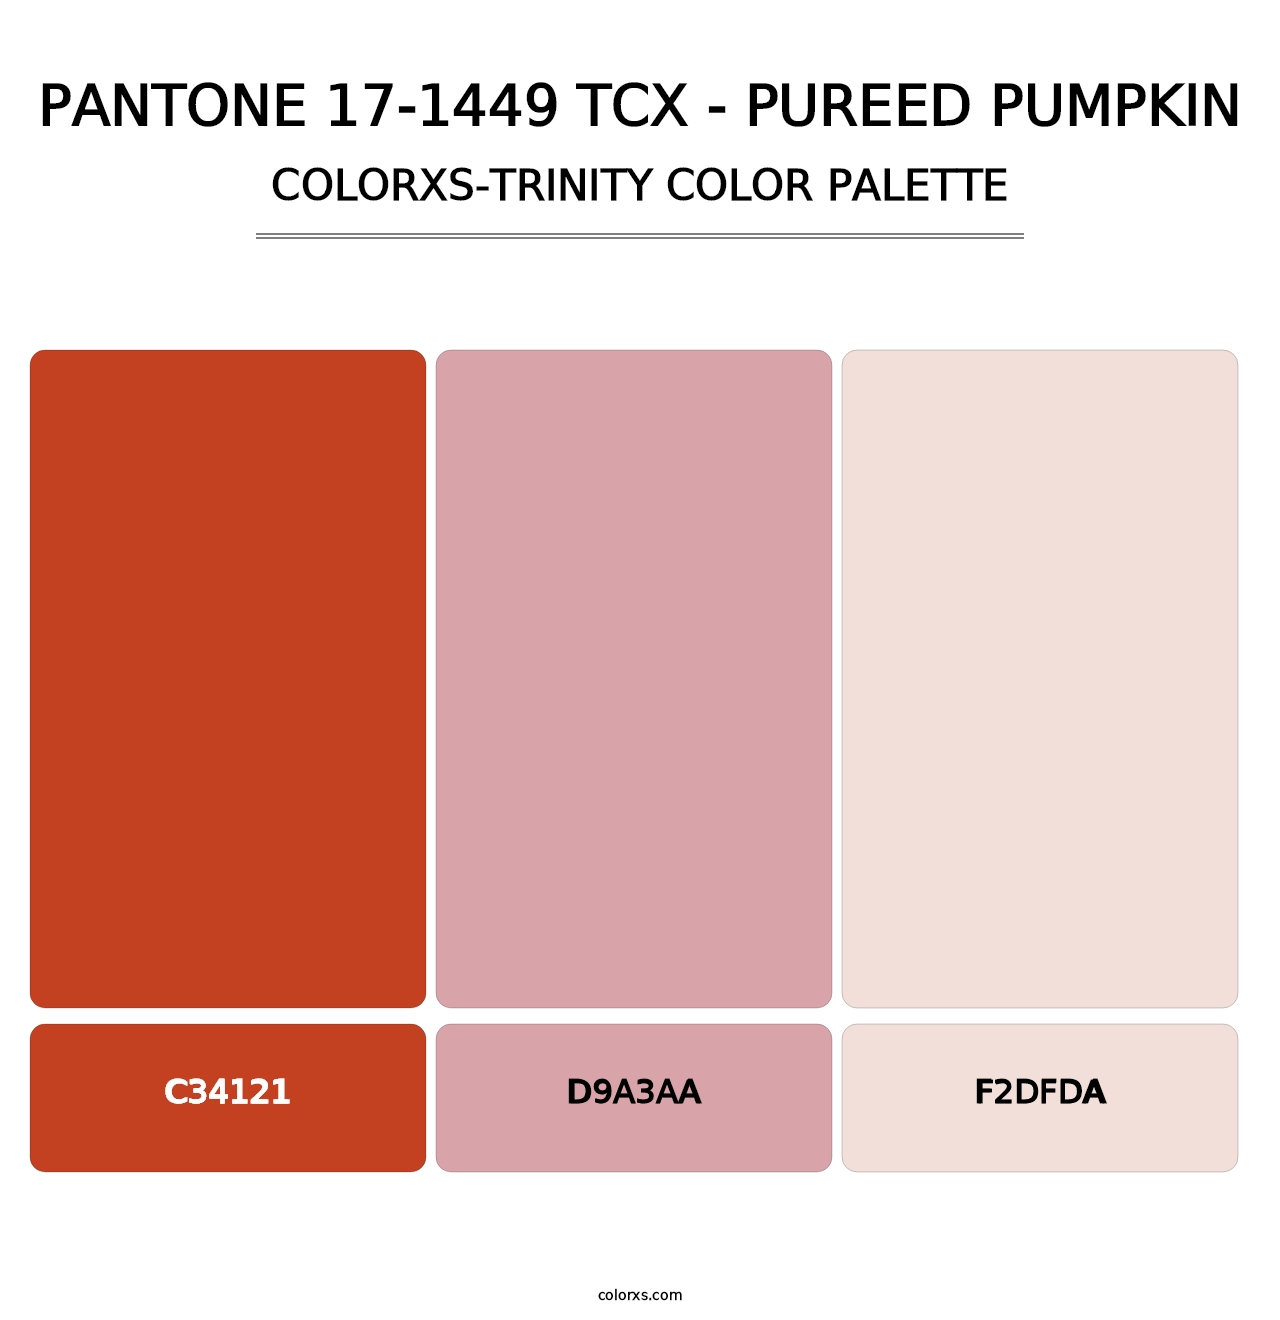 PANTONE 17-1449 TCX - Pureed Pumpkin - Colorxs Trinity Palette